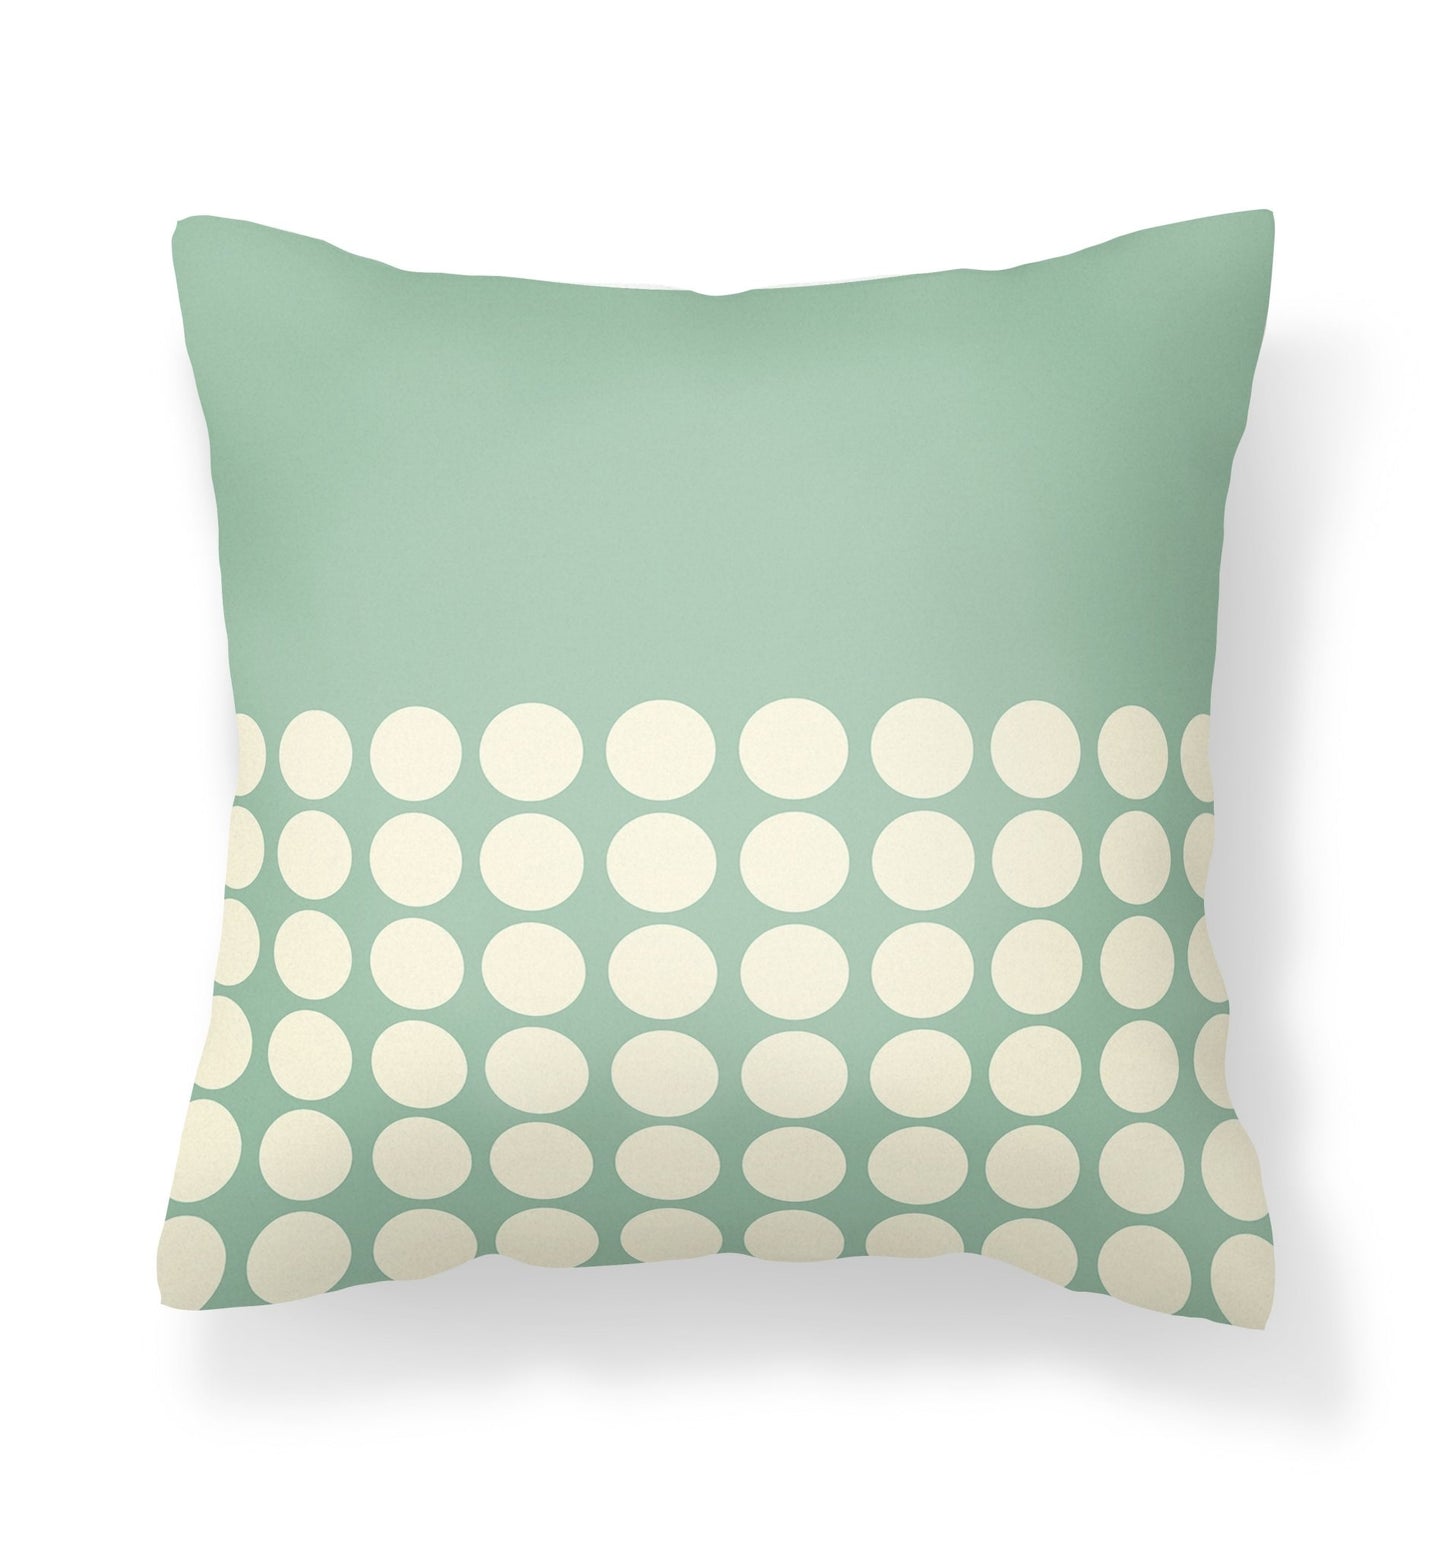 Polka Dot Outdoor Pillows - Green, Brown and Cream Dots